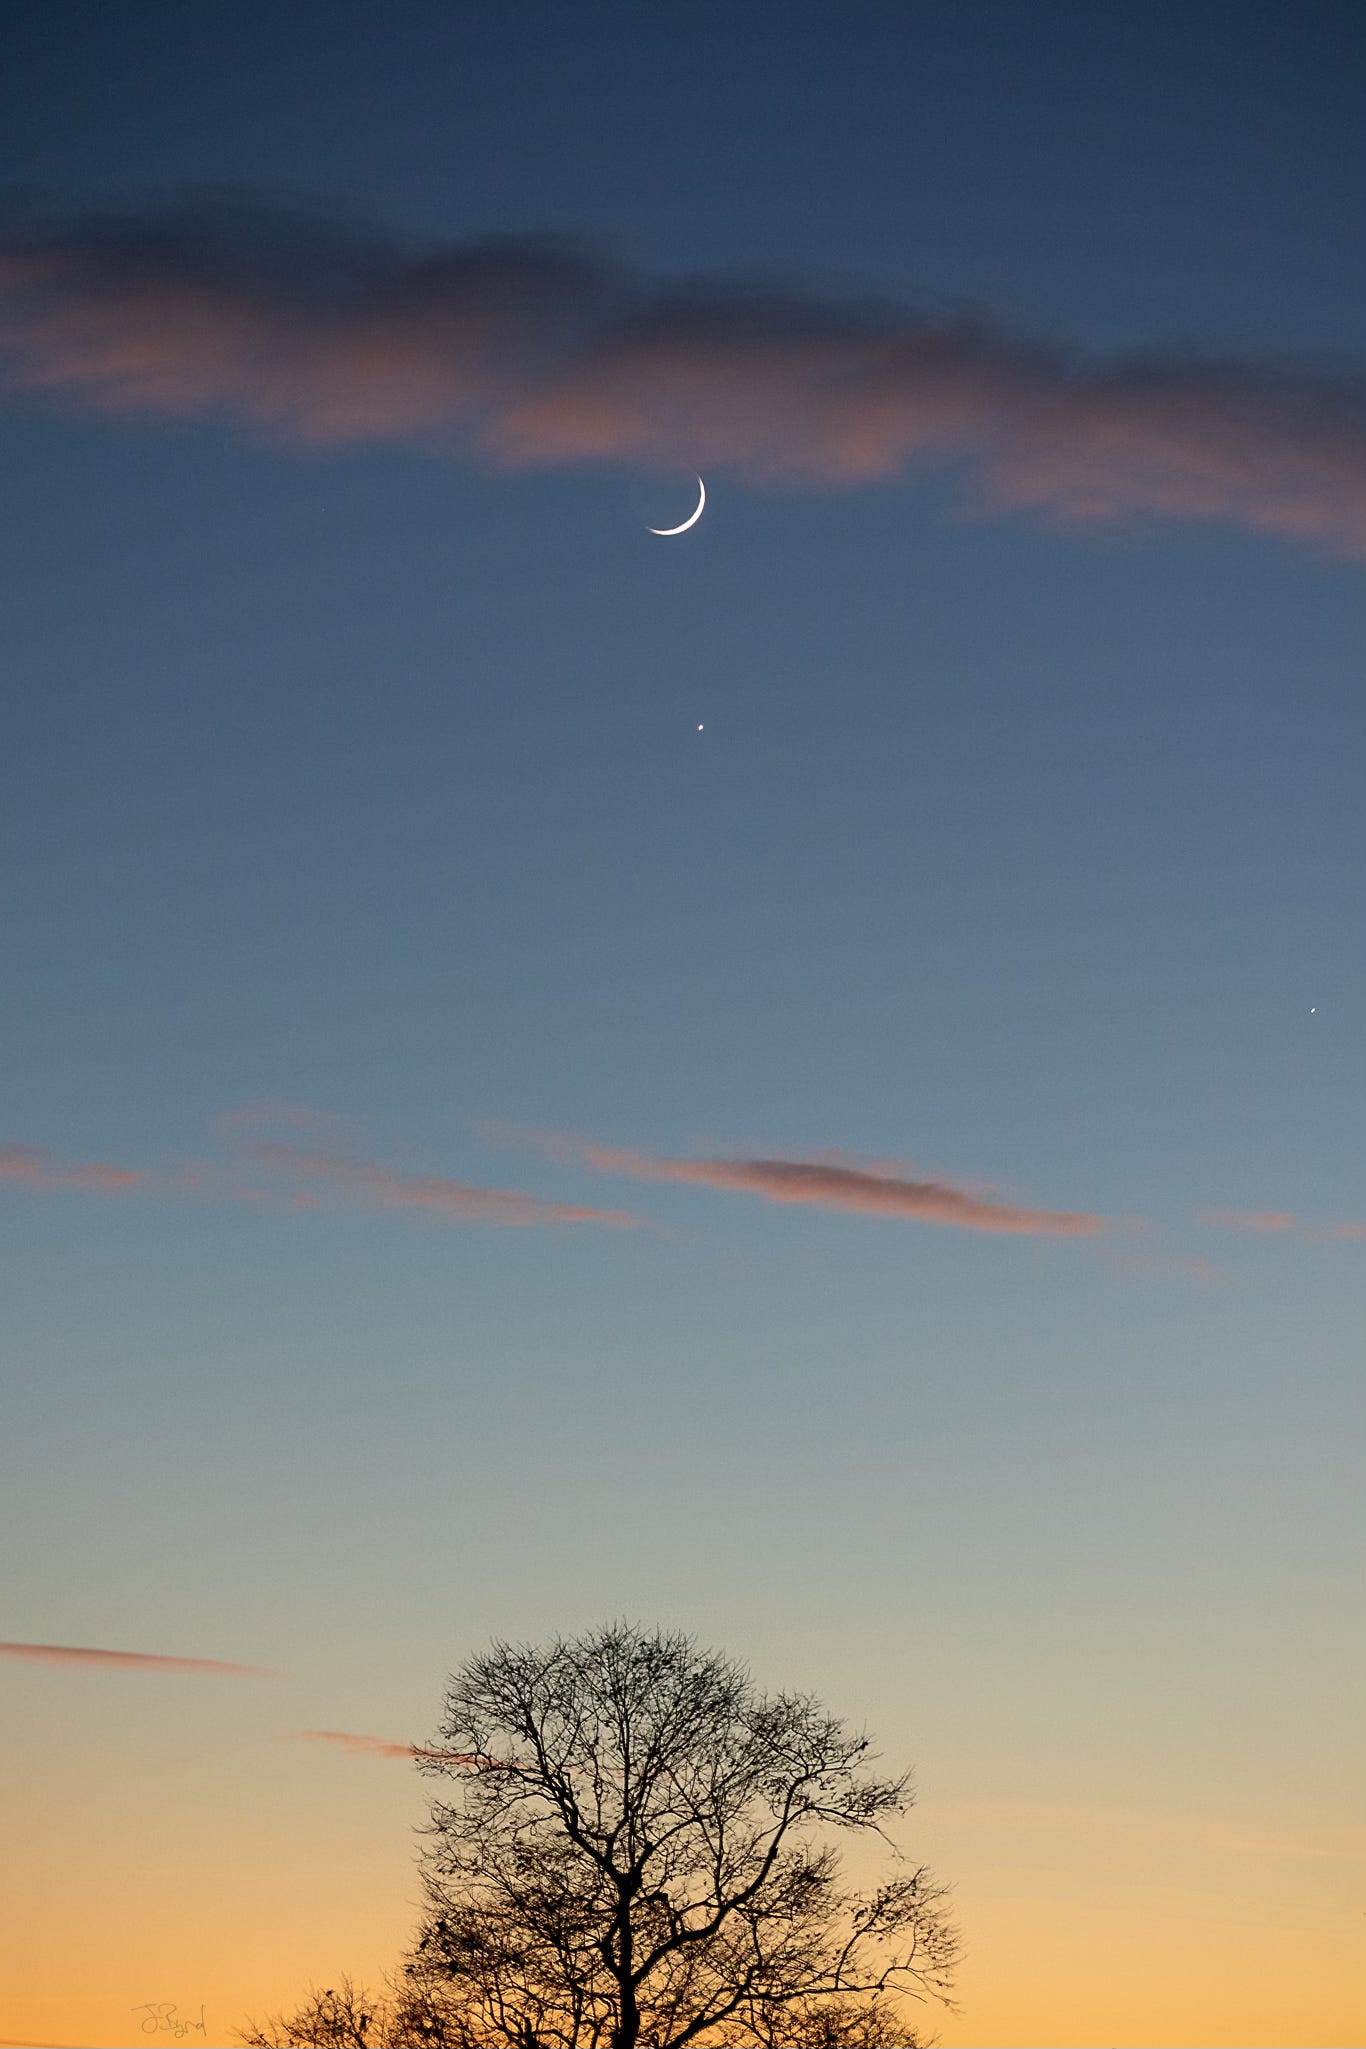 A crescent moon rises above an oak tree.